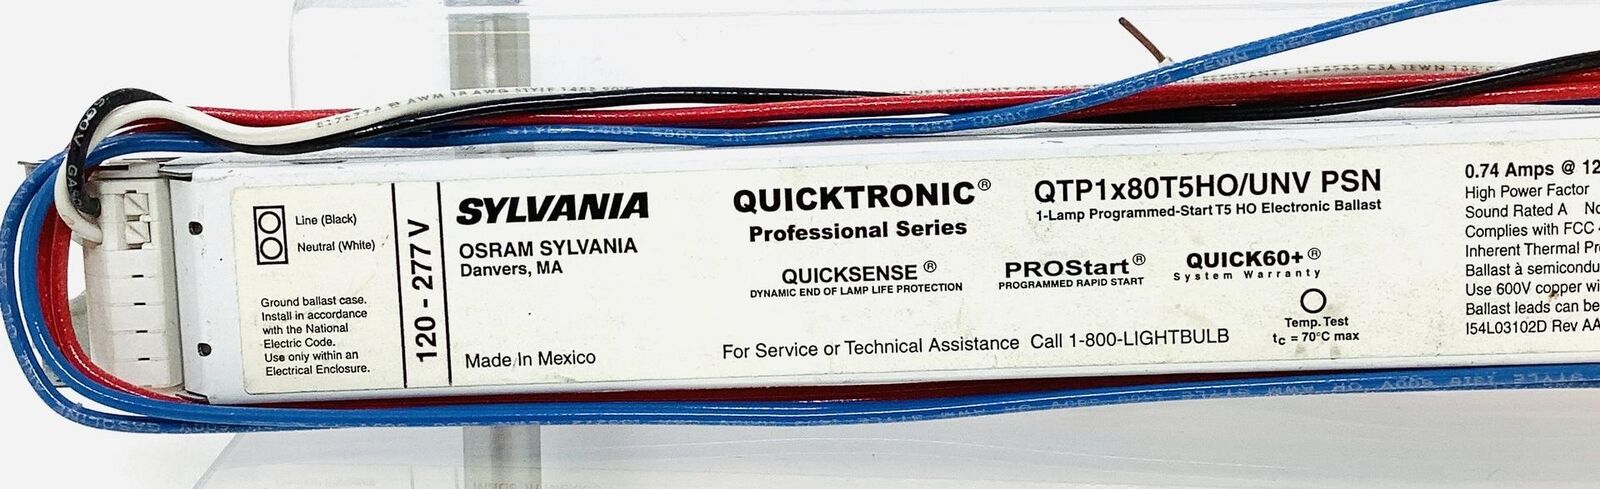 Sylvania Quicktronic Rapid Pro 1-Lamp Programmed-Start T5 HO Electronic Ballast